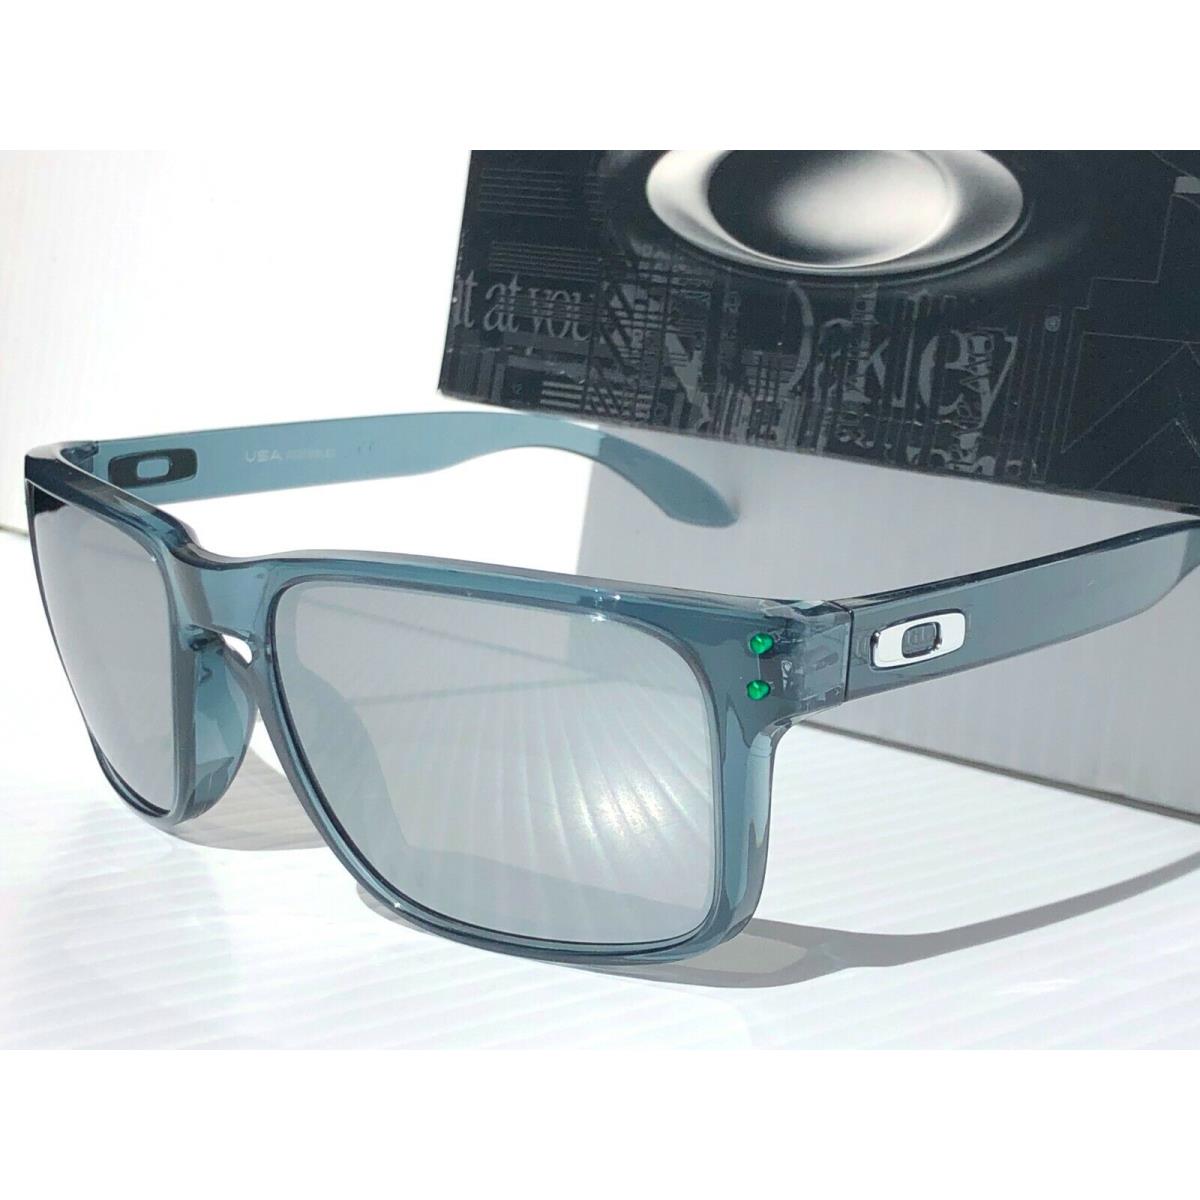 Oakley sunglasses Holbrook - Gray Frame, Silver Lens